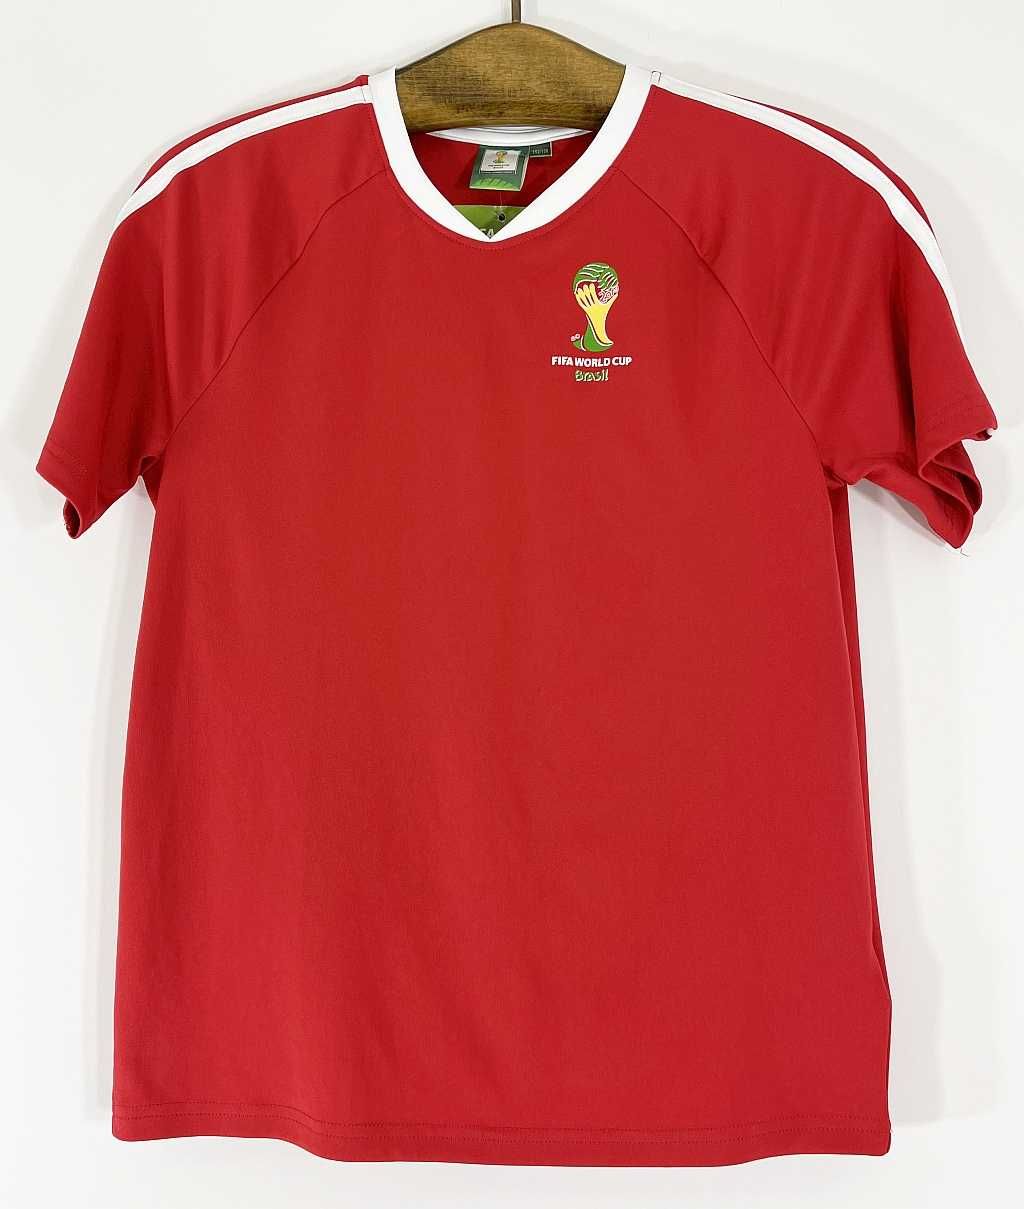 T-shirt koszulka chłopięca czerwona Fifa World Cup R 152 / 158